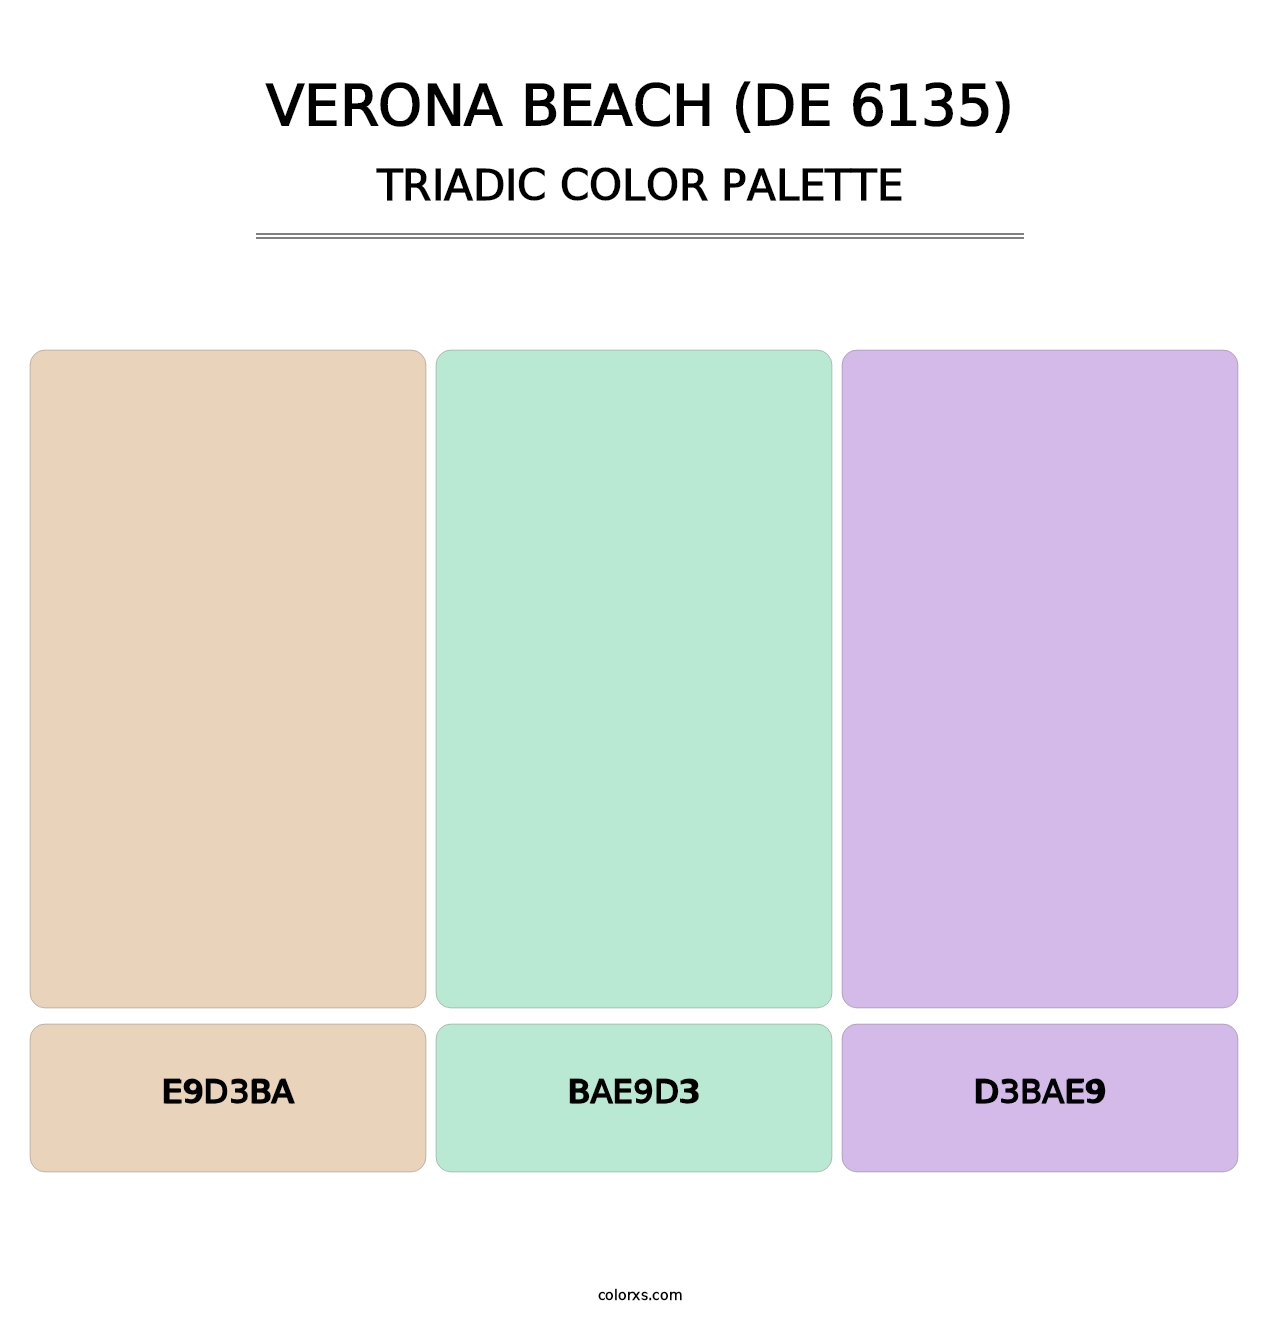 Verona Beach (DE 6135) - Triadic Color Palette